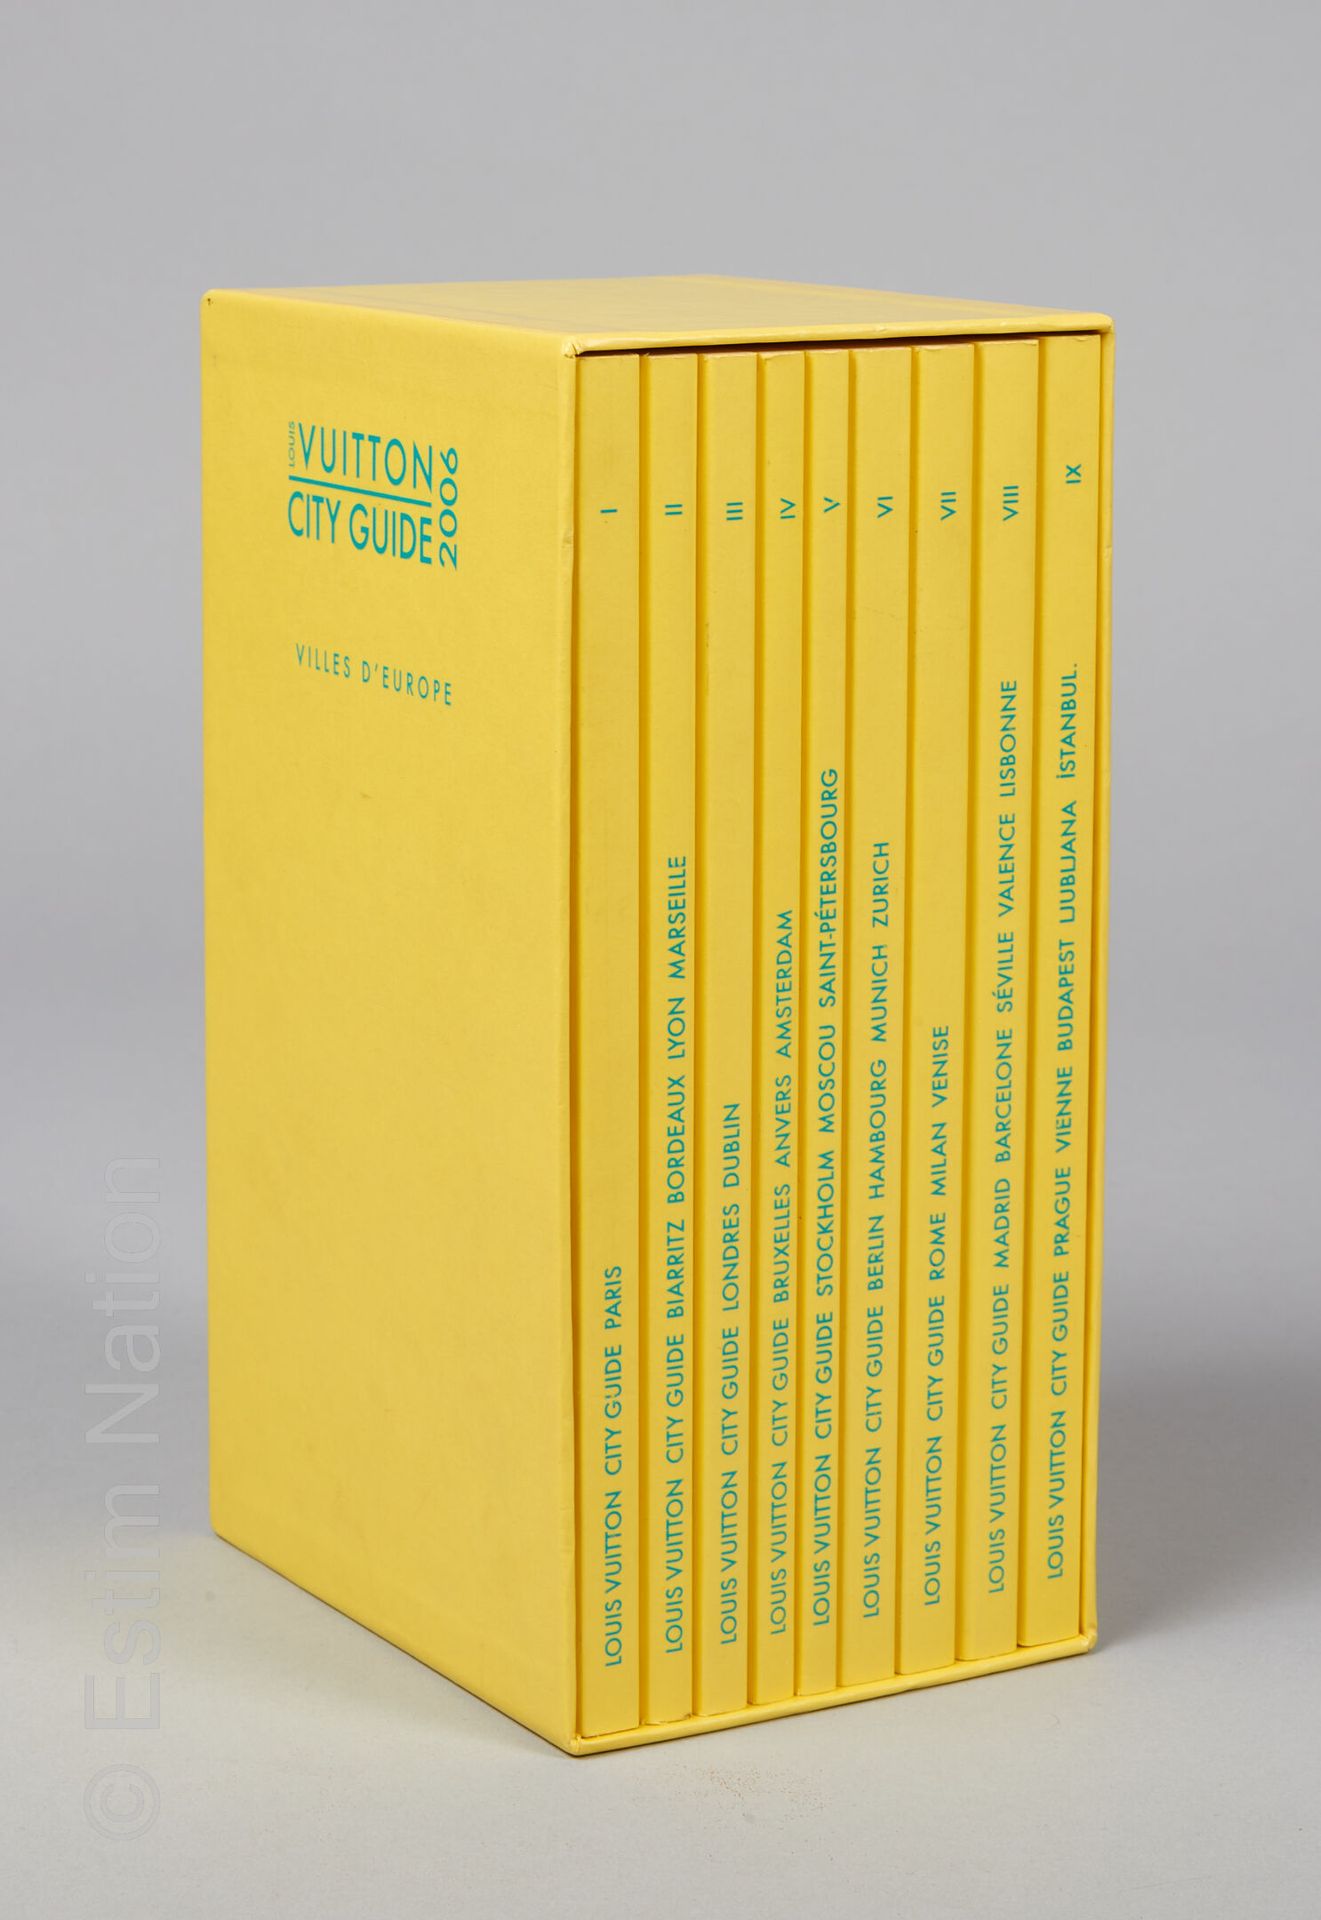 LOUIS VUITTON (2006) 欧洲城市的城市指南，包括九本小册子